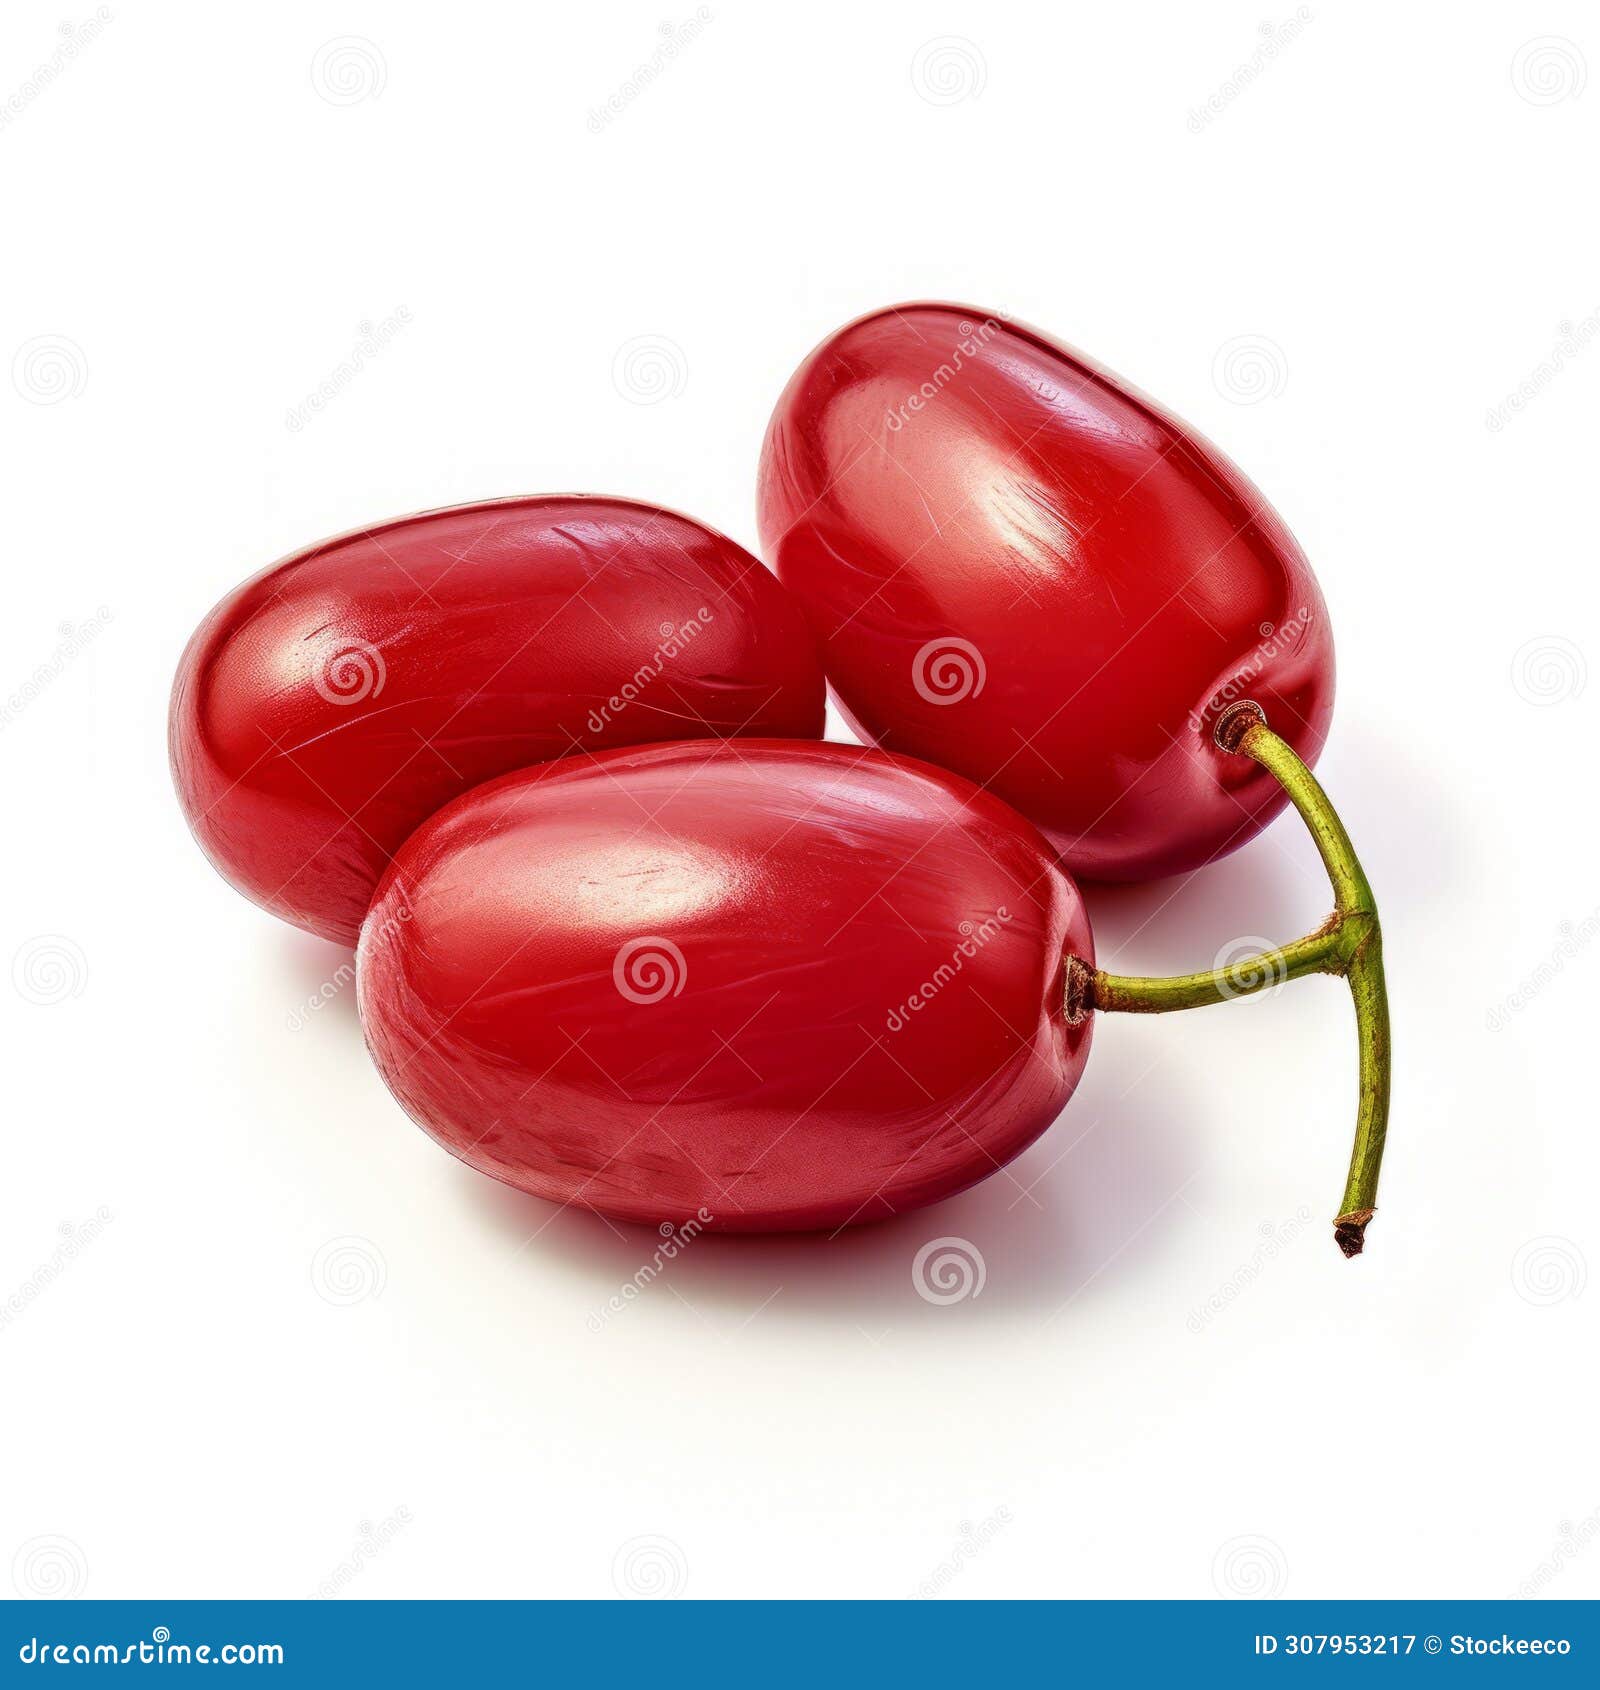 vibrant zbrush art: three red cherries on white background